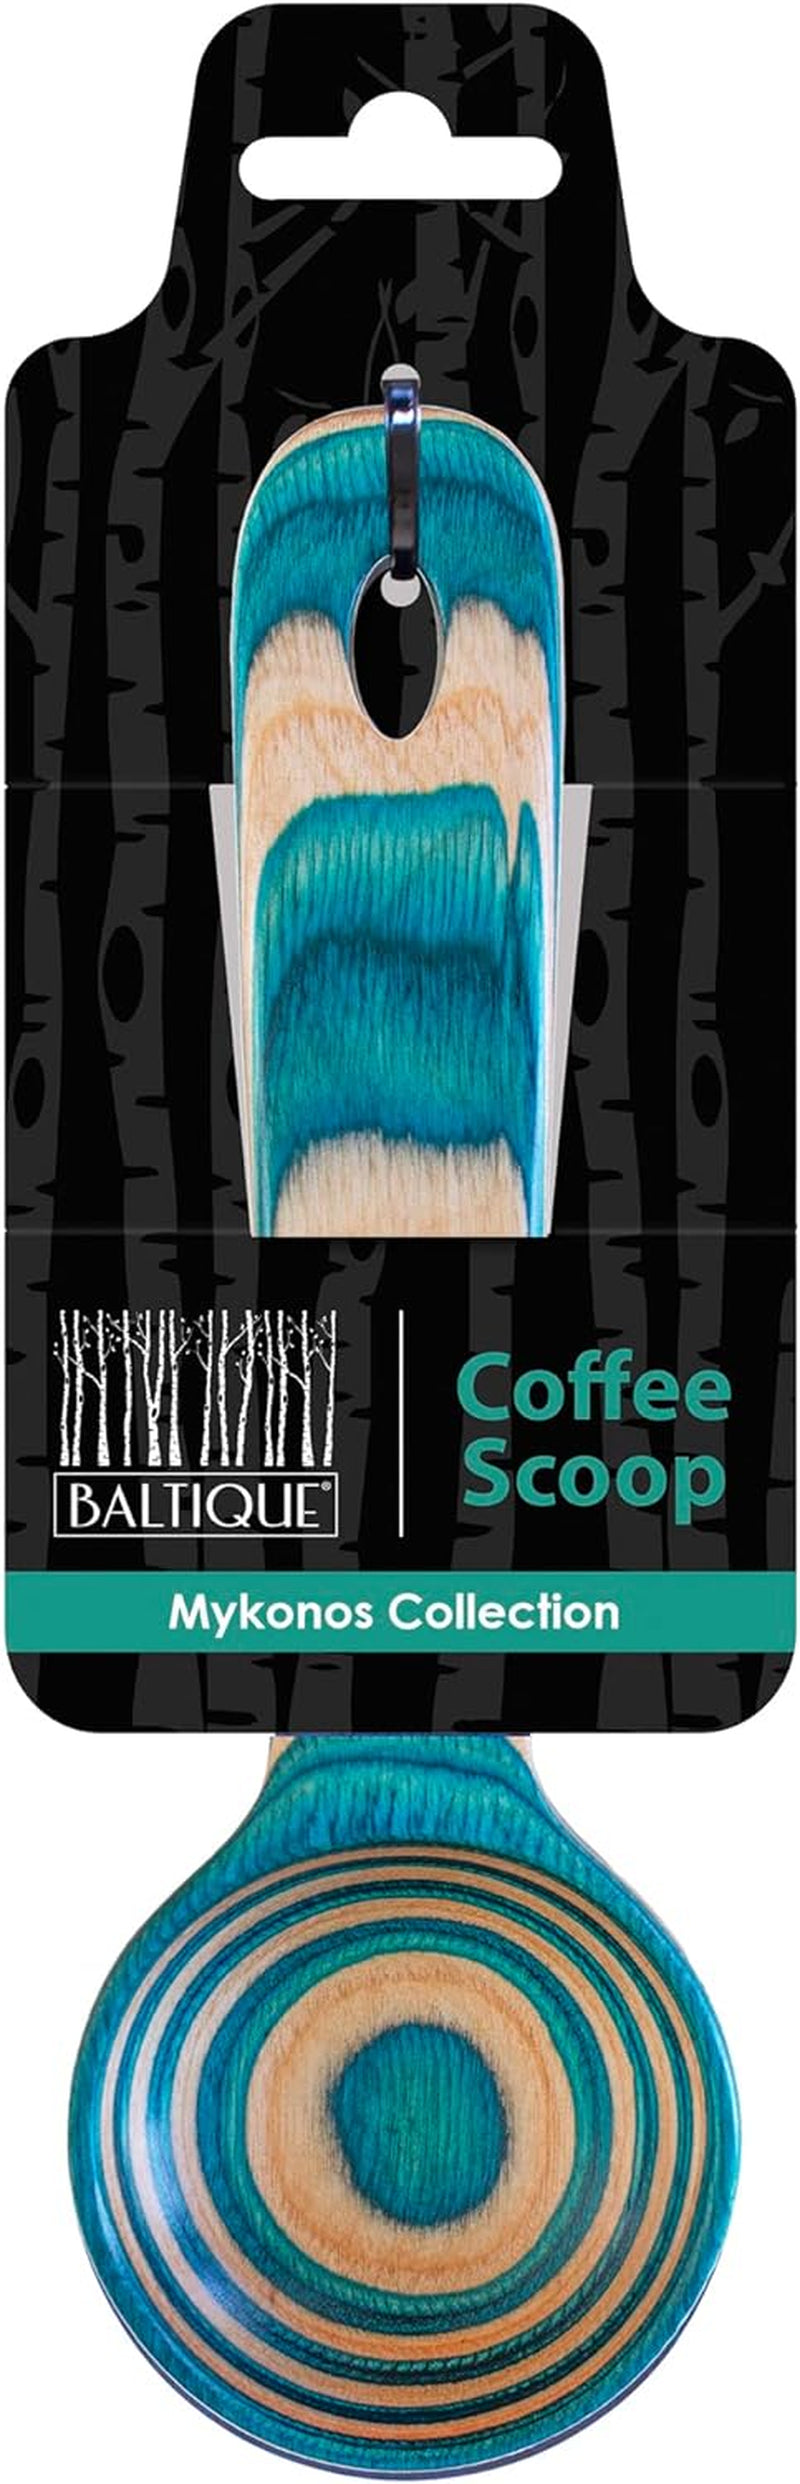 Baltique Mykonos Collection Wooden Coffee Scoop